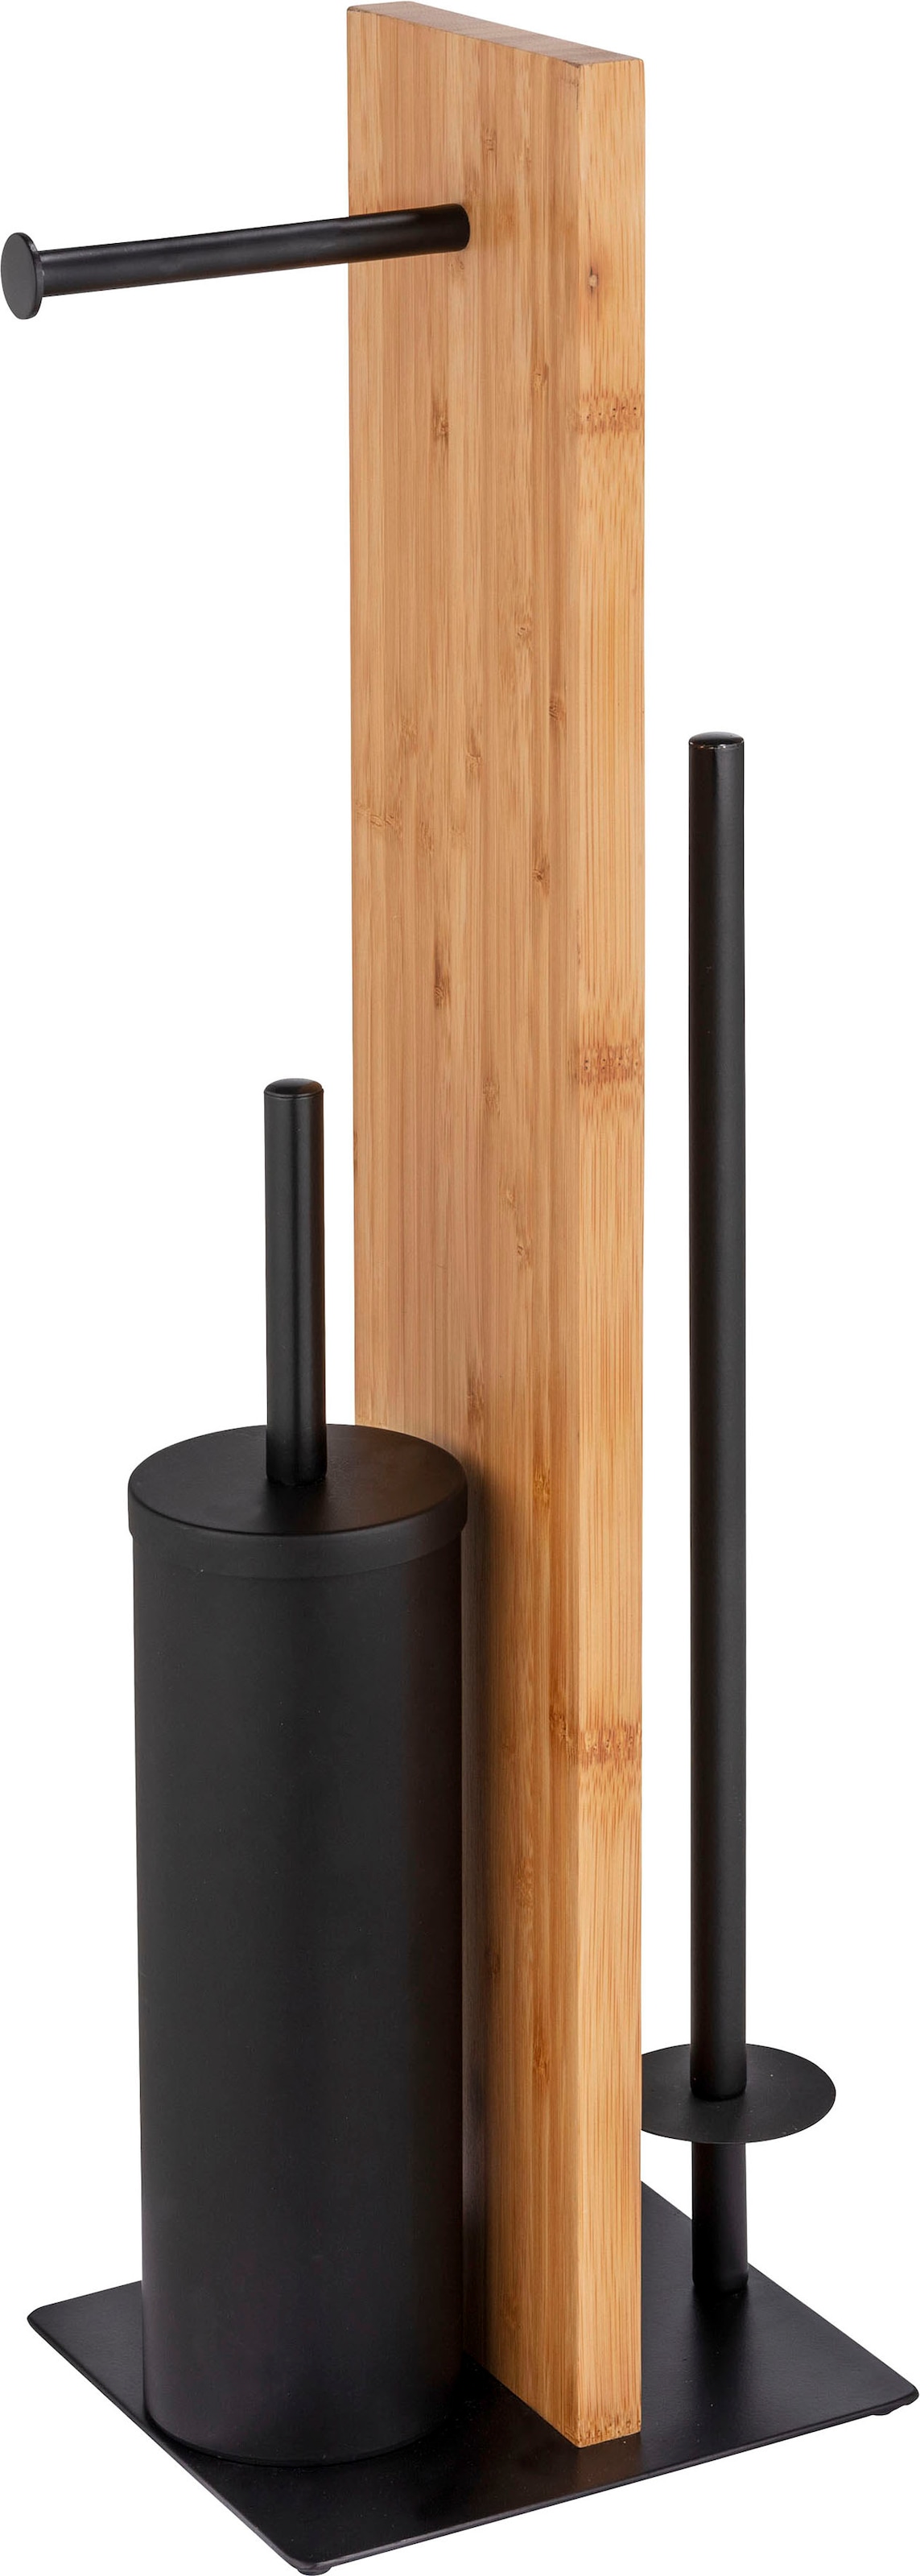 WC-Garnitur »Lesina«, aus Bambus-Stahl, bambus, mit Silikon-Bürstenkopf